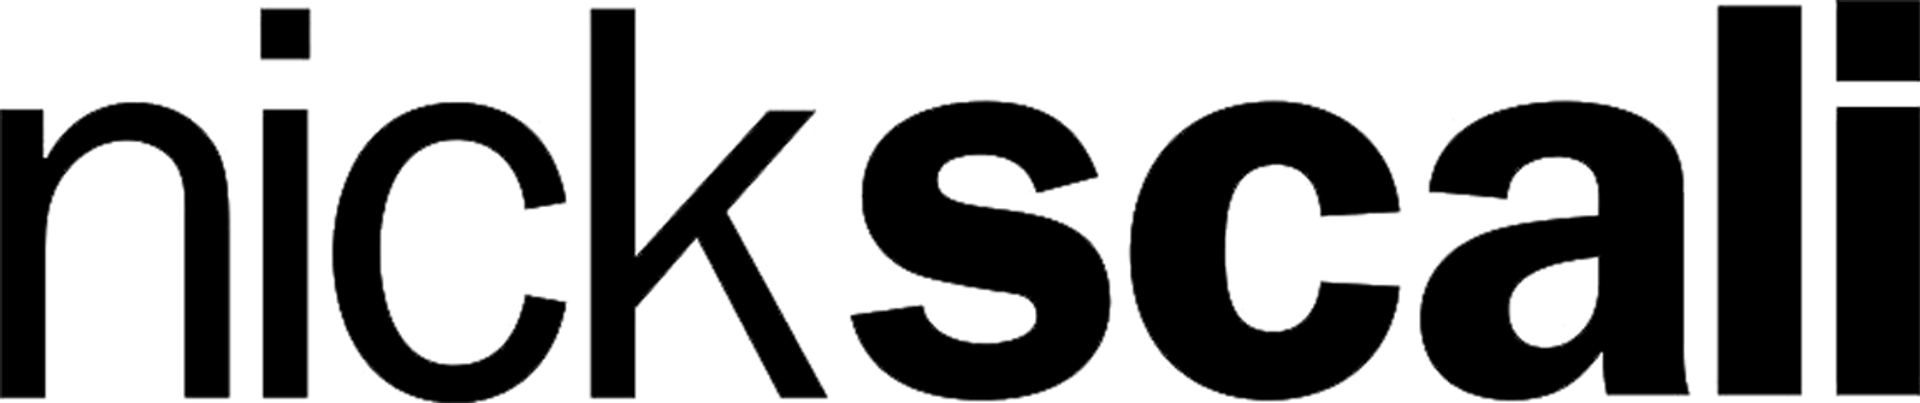 NICK SCALI logo. Current weekly ad